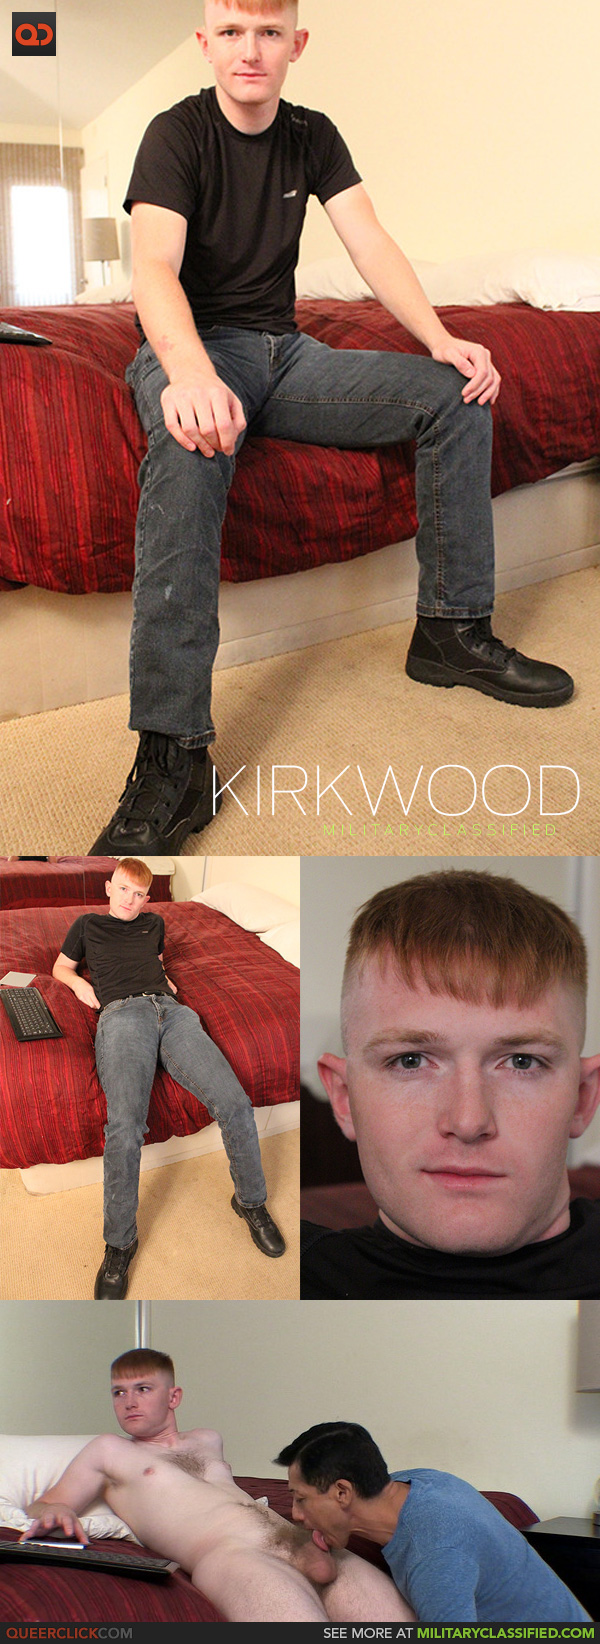 Military Classified: Kirkwood